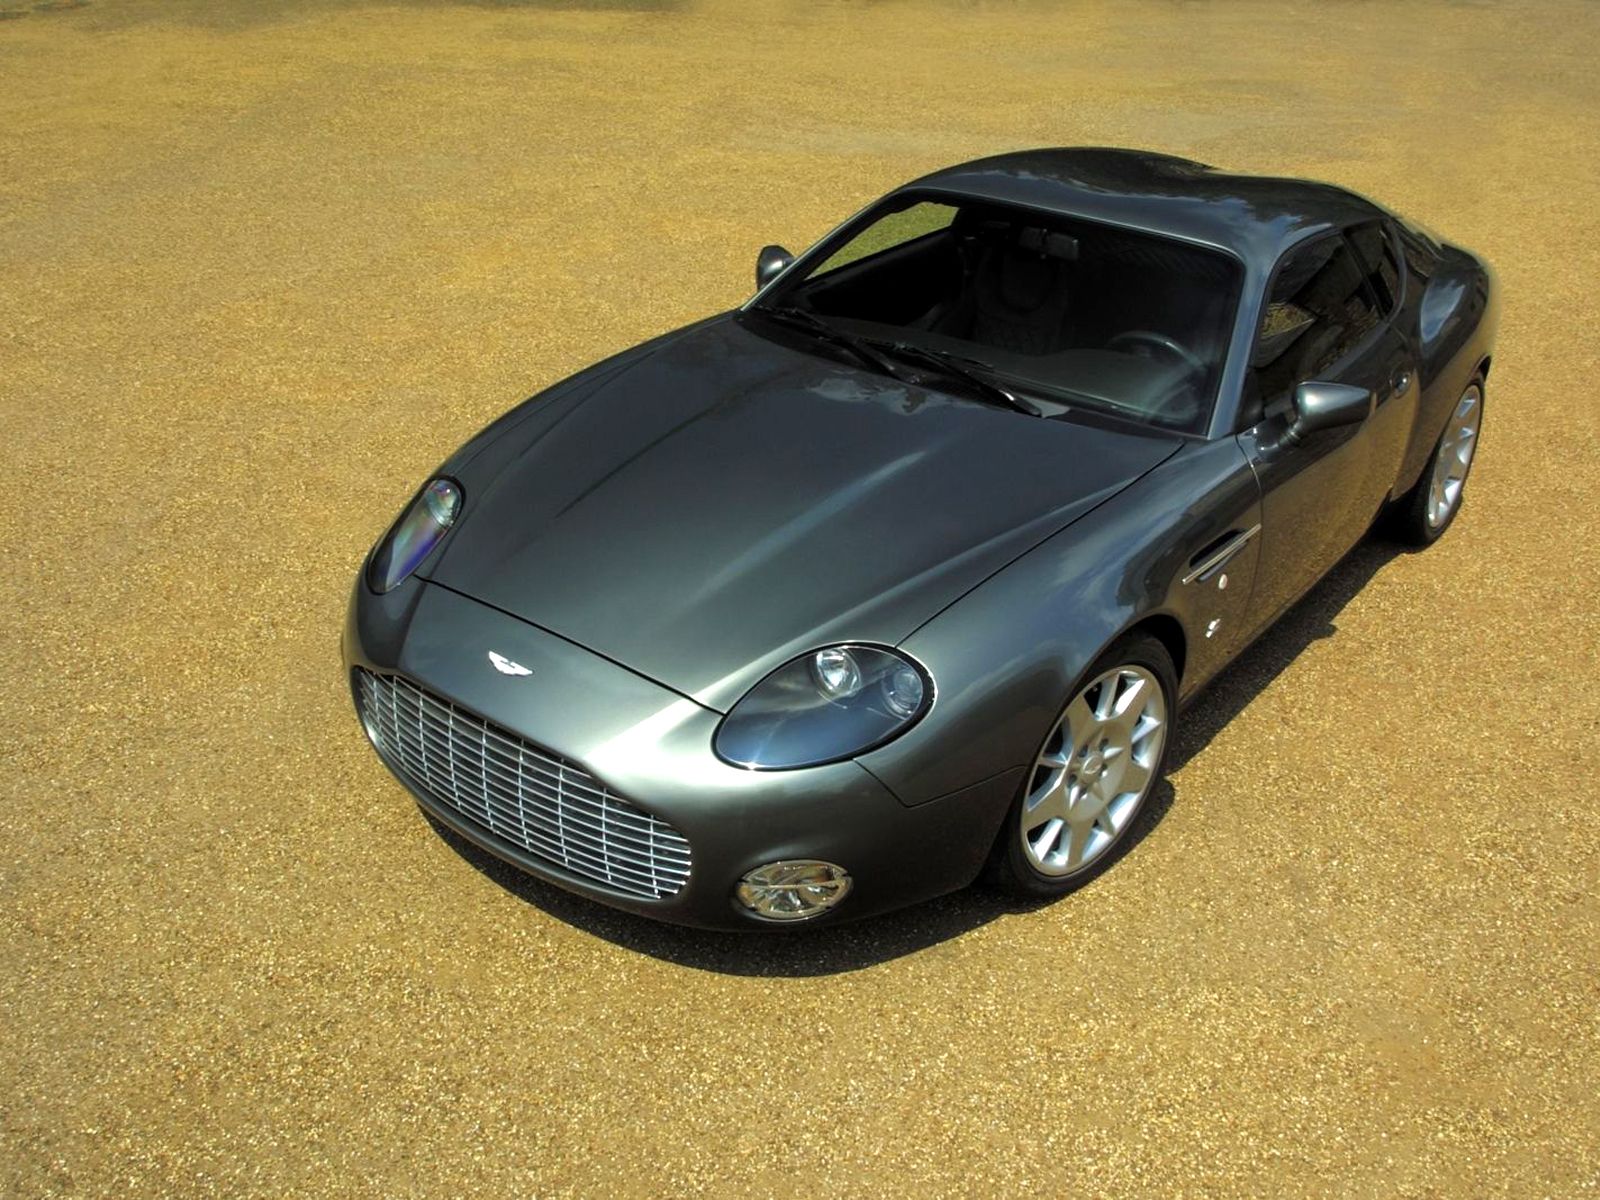 Aston Martin DB 7 Zagato